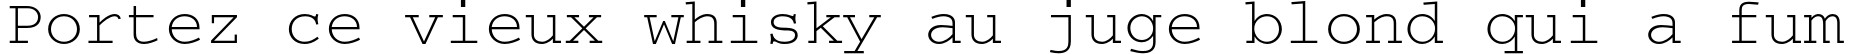 Пример написания шрифтом CourierC текста на французском